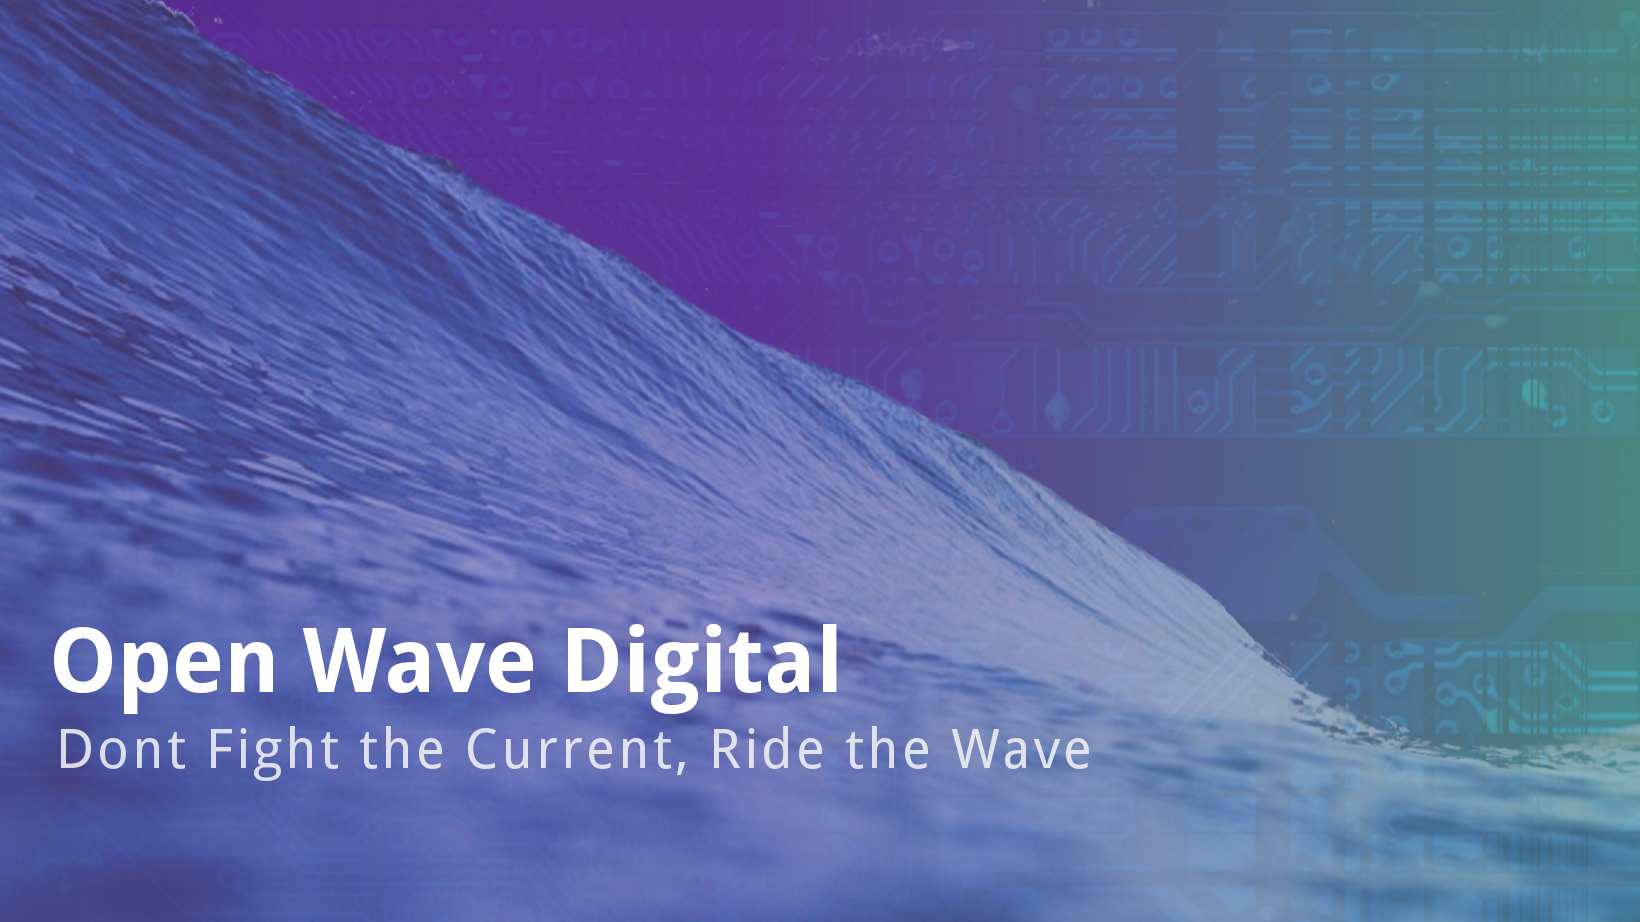 Presenting Open Wave Digital